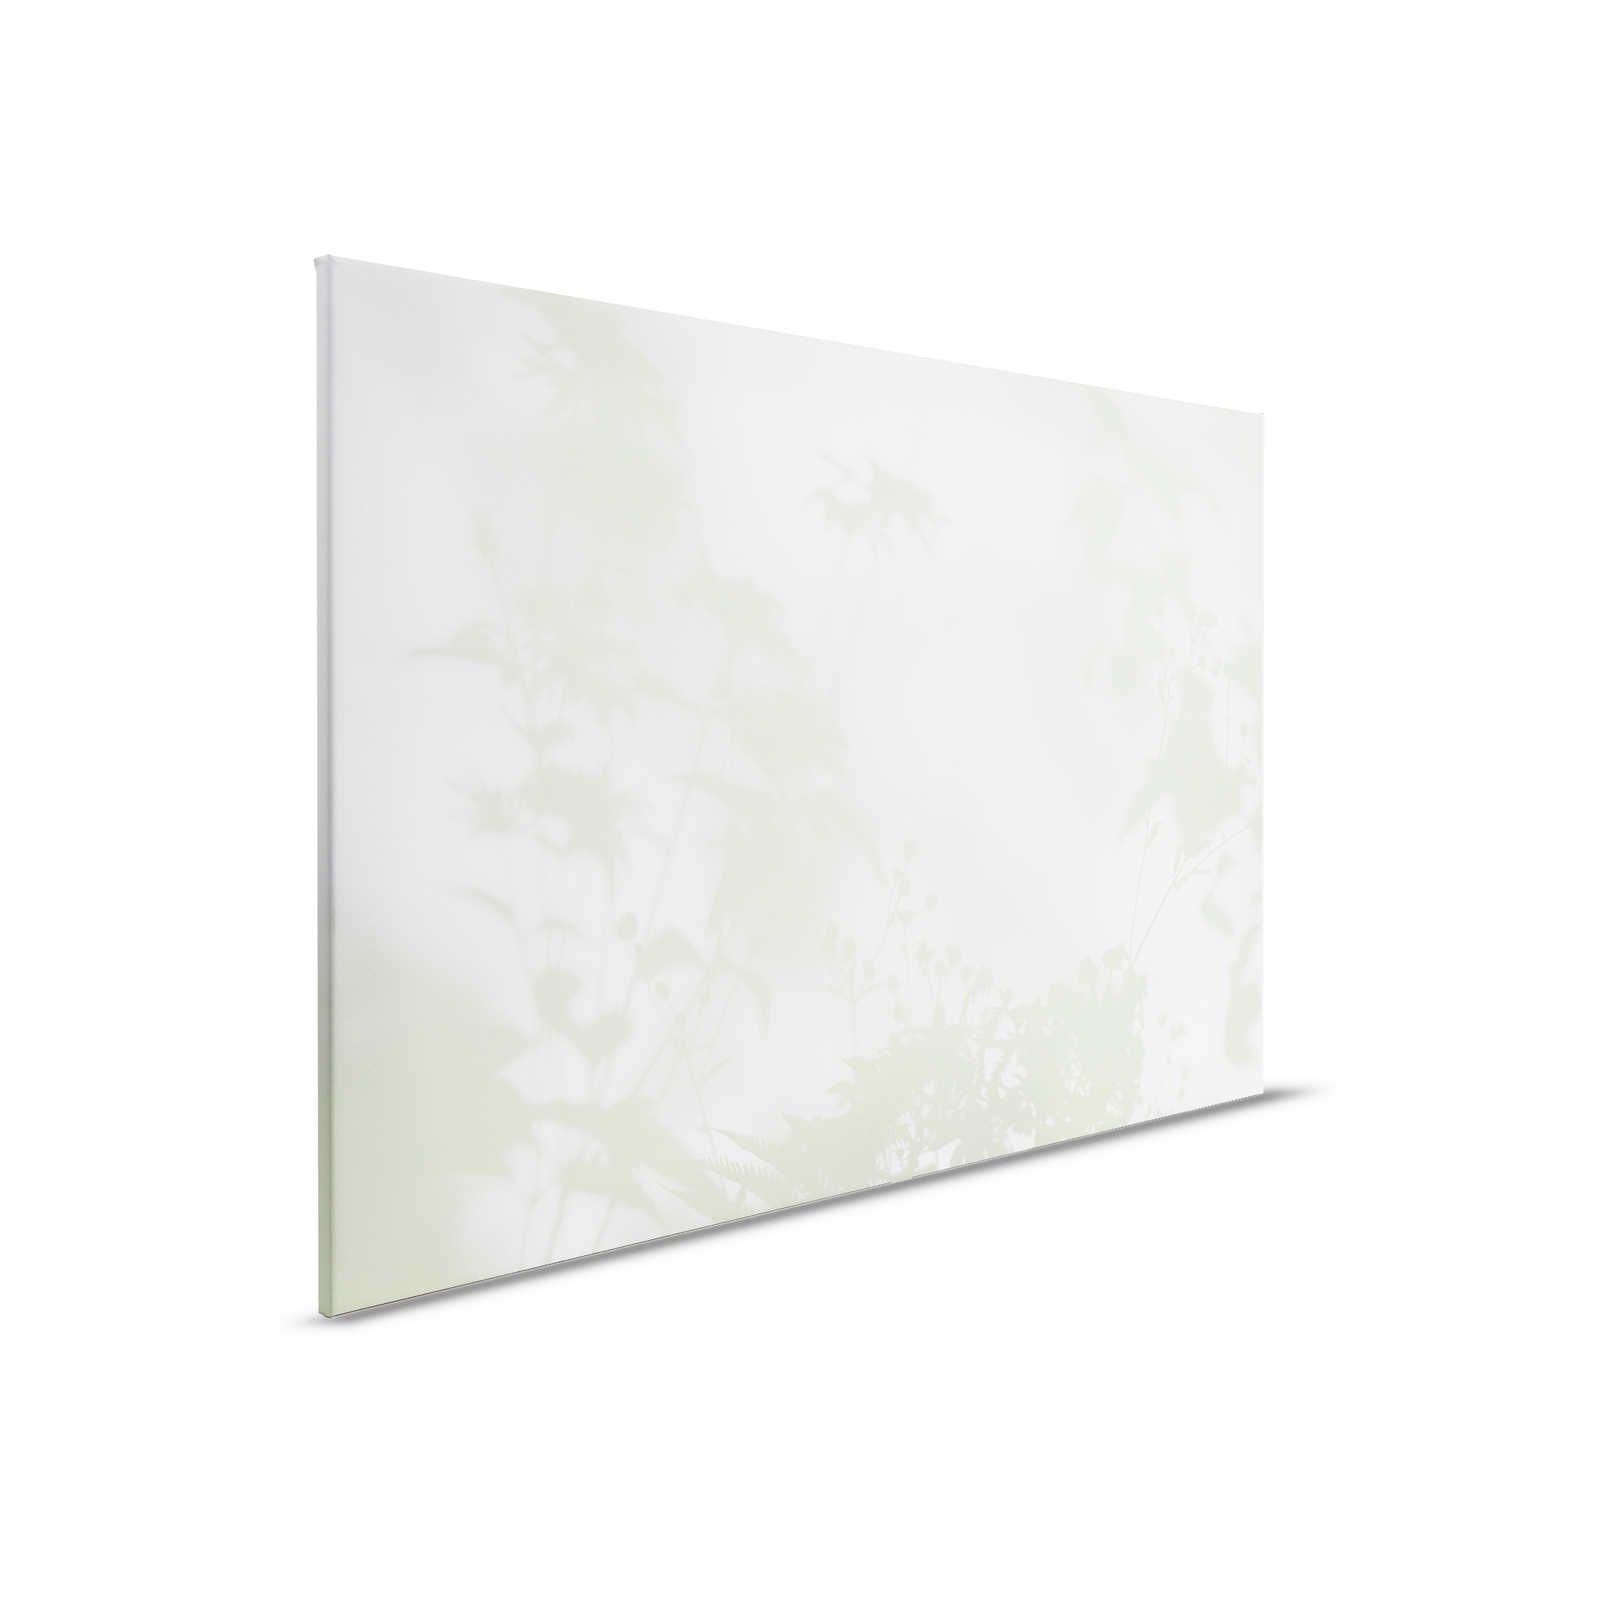 Shadow Room 3 - Natur Leinwandbild Grün & Weiß, verblasstes Design – 0,90 m x 0,60 m
